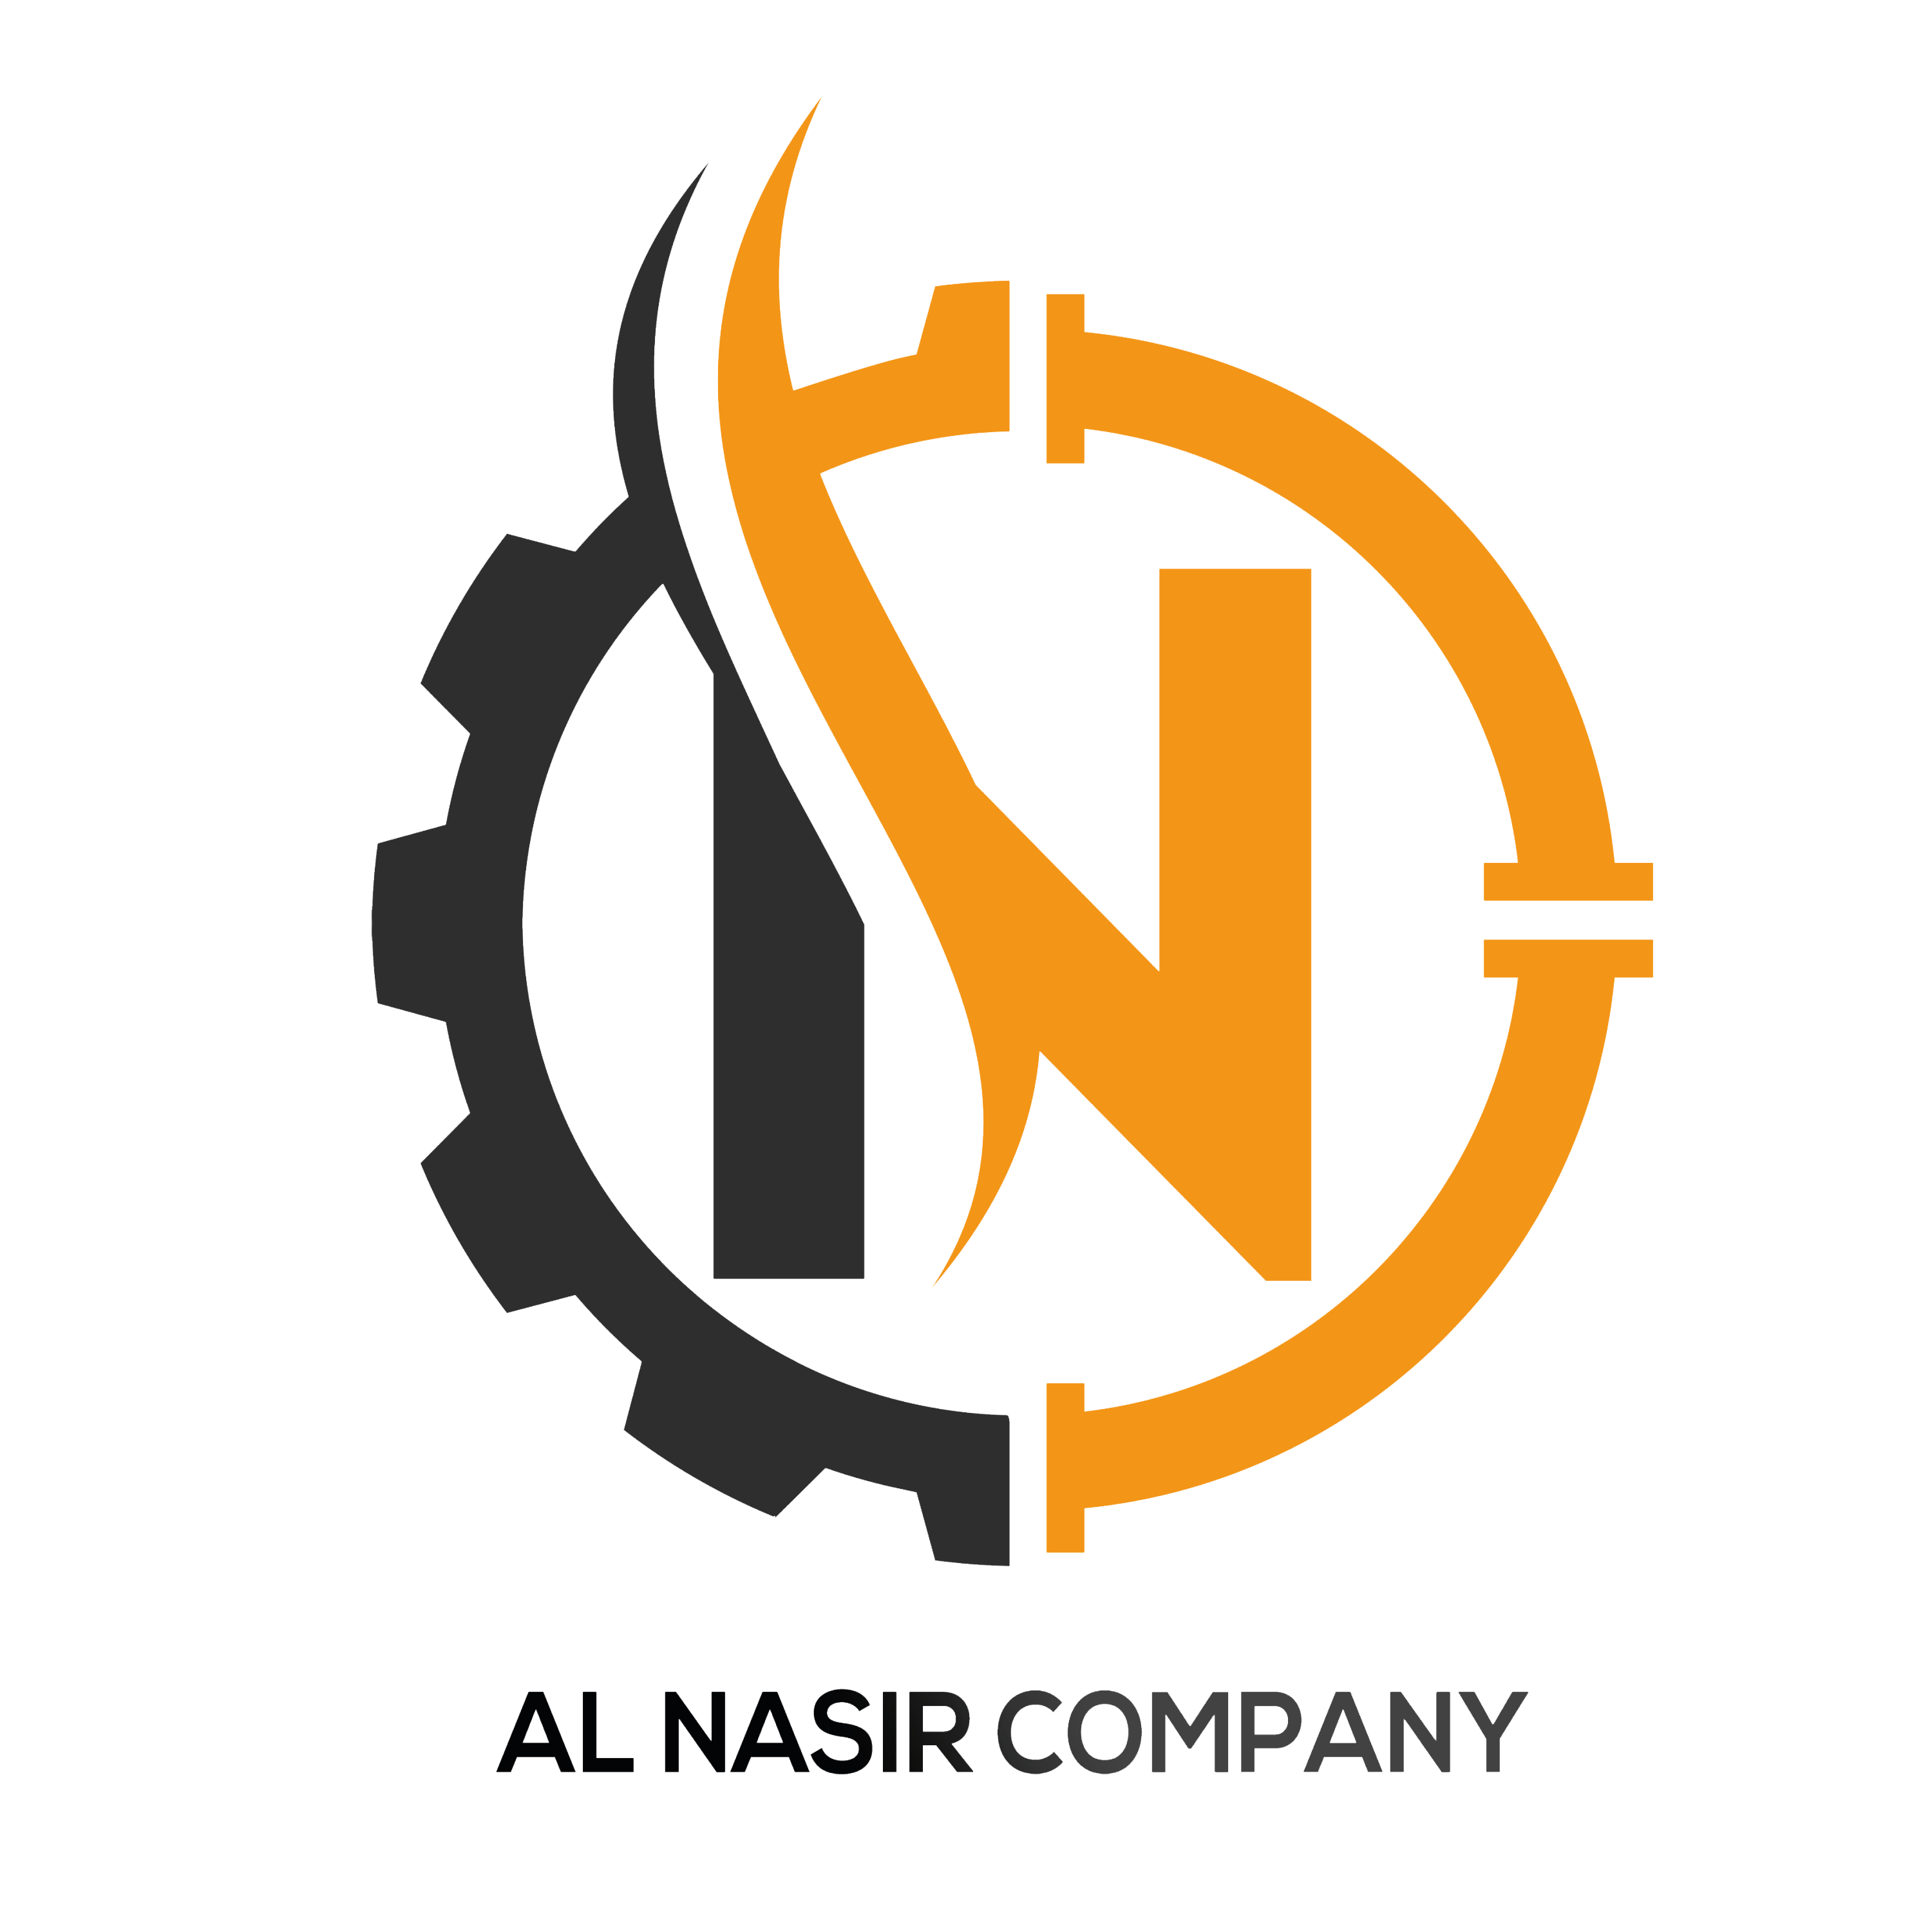 Al Nasir Company | Oil, Logistics, Procurement